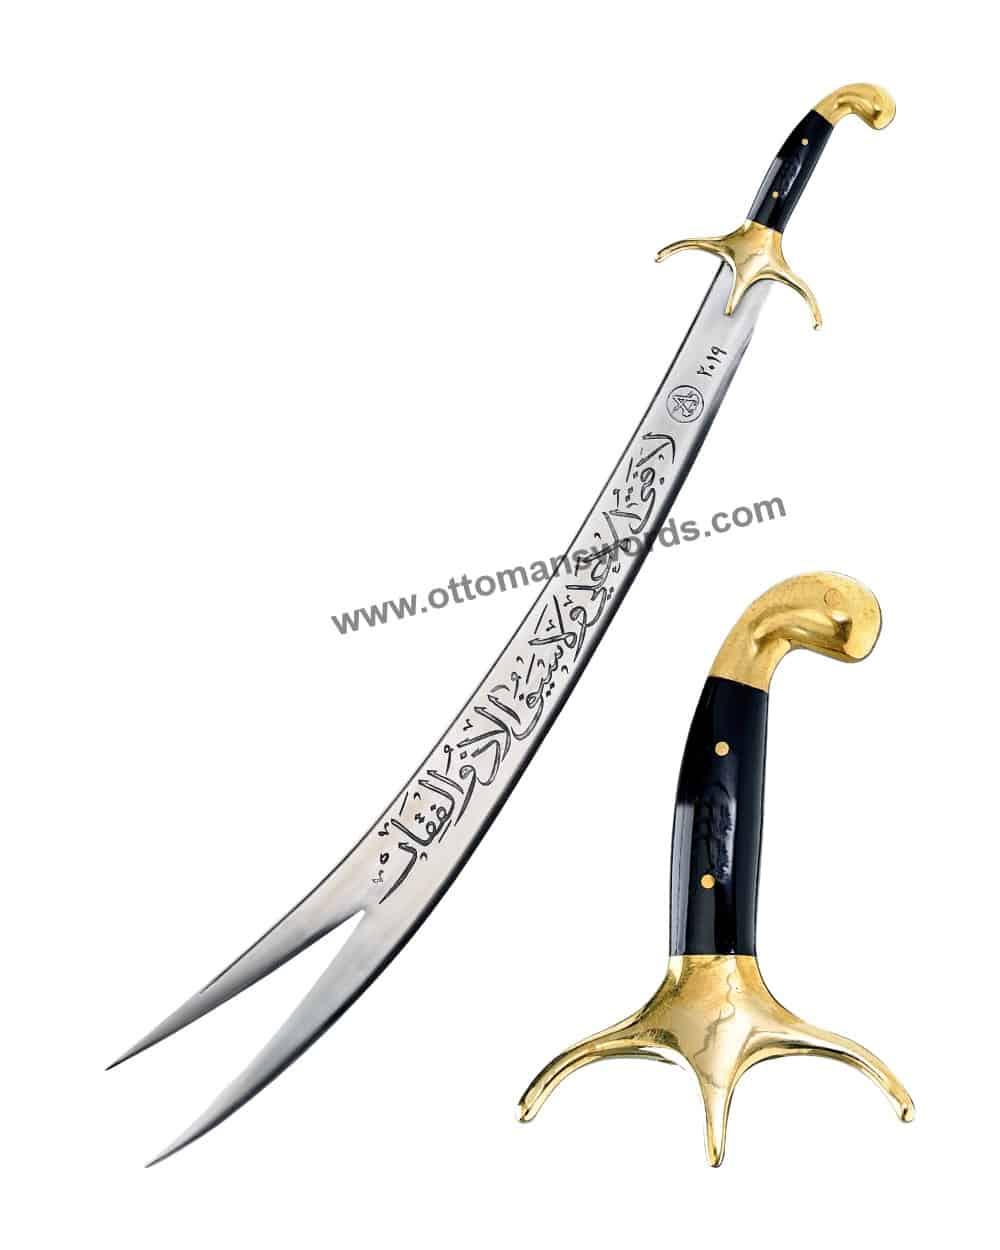 sword of ali imam ali sword